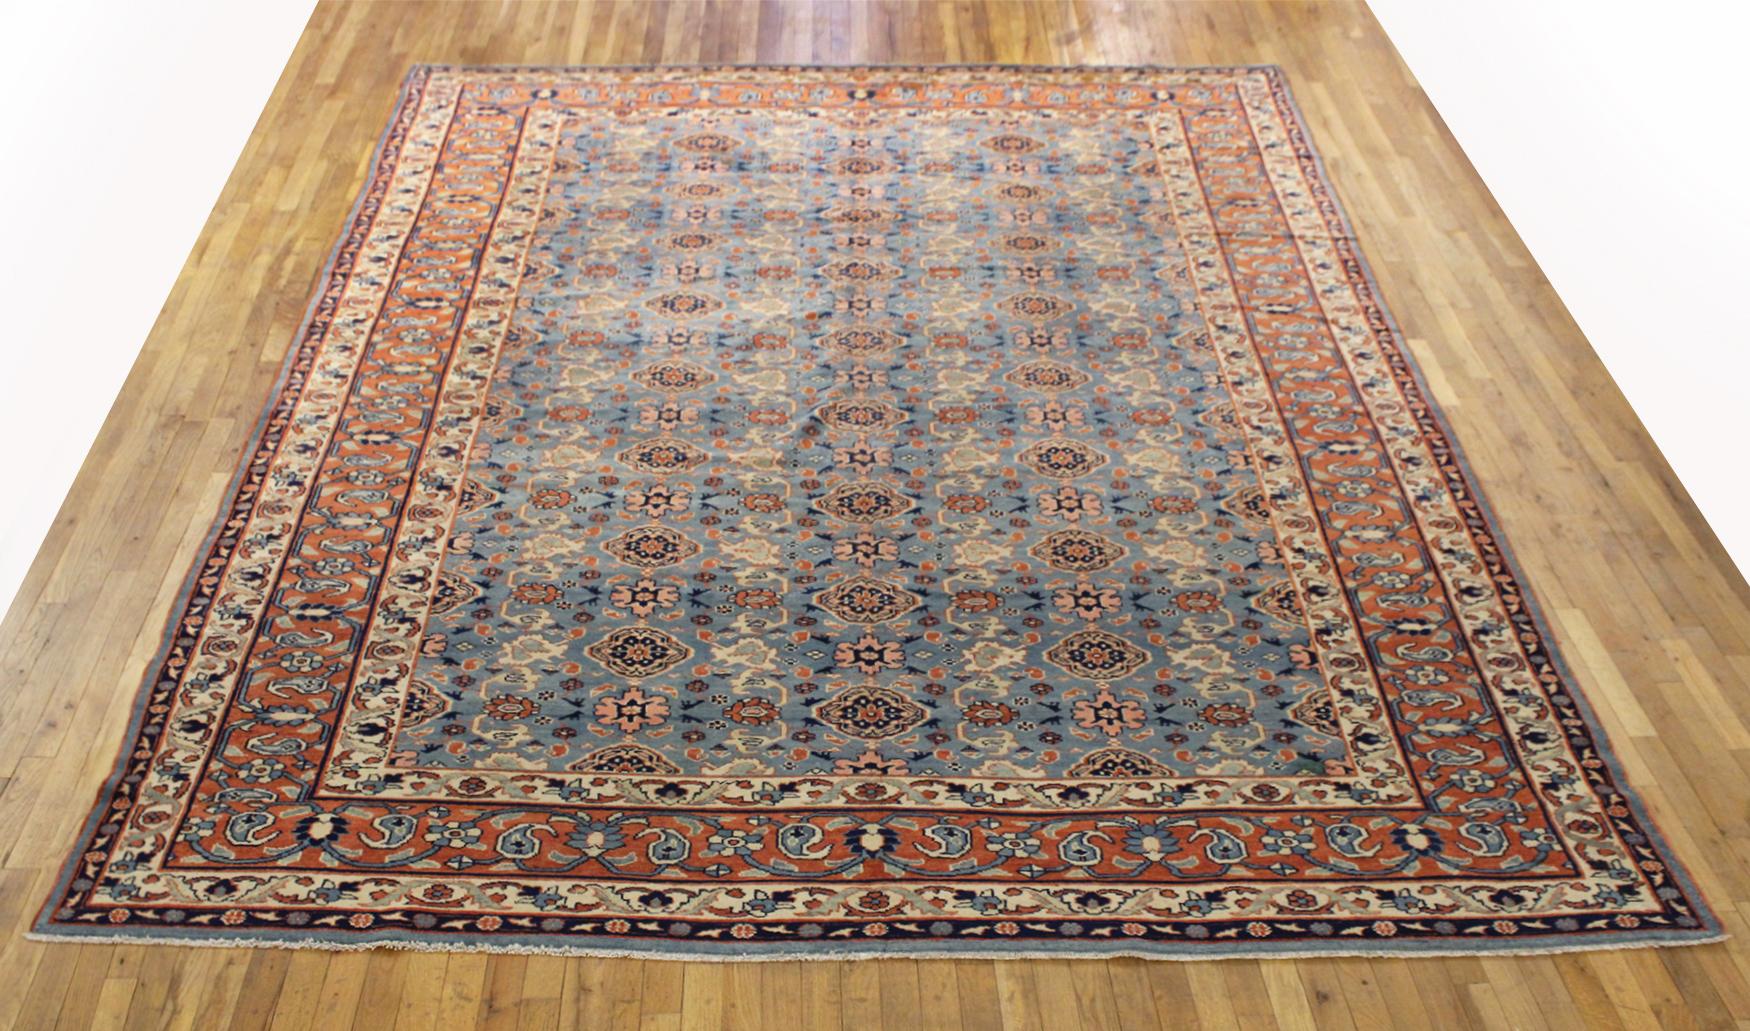 Antique Northwest Persian carpet, Room size, size 11'6